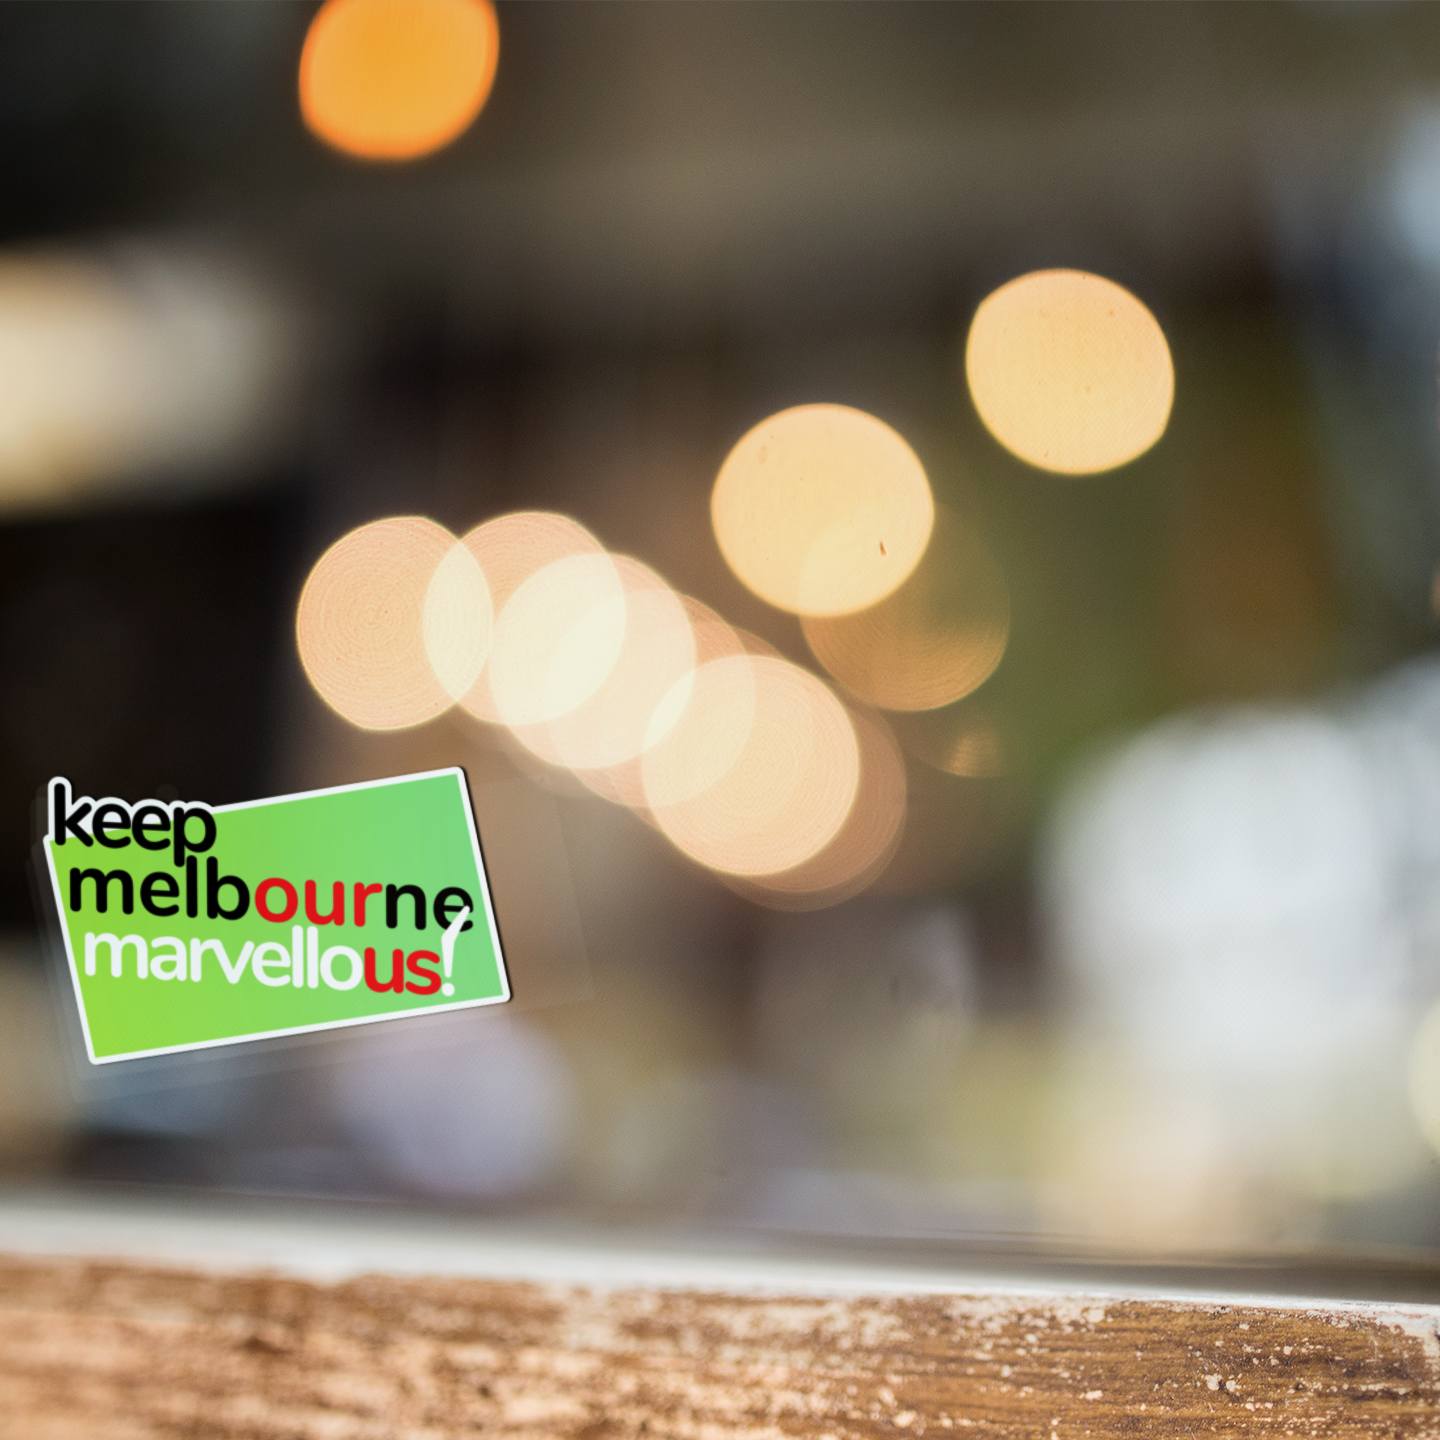 Keep Melbourne Marvellous! Hoddle Grid Stickers - Green Background 10cm x 7cm